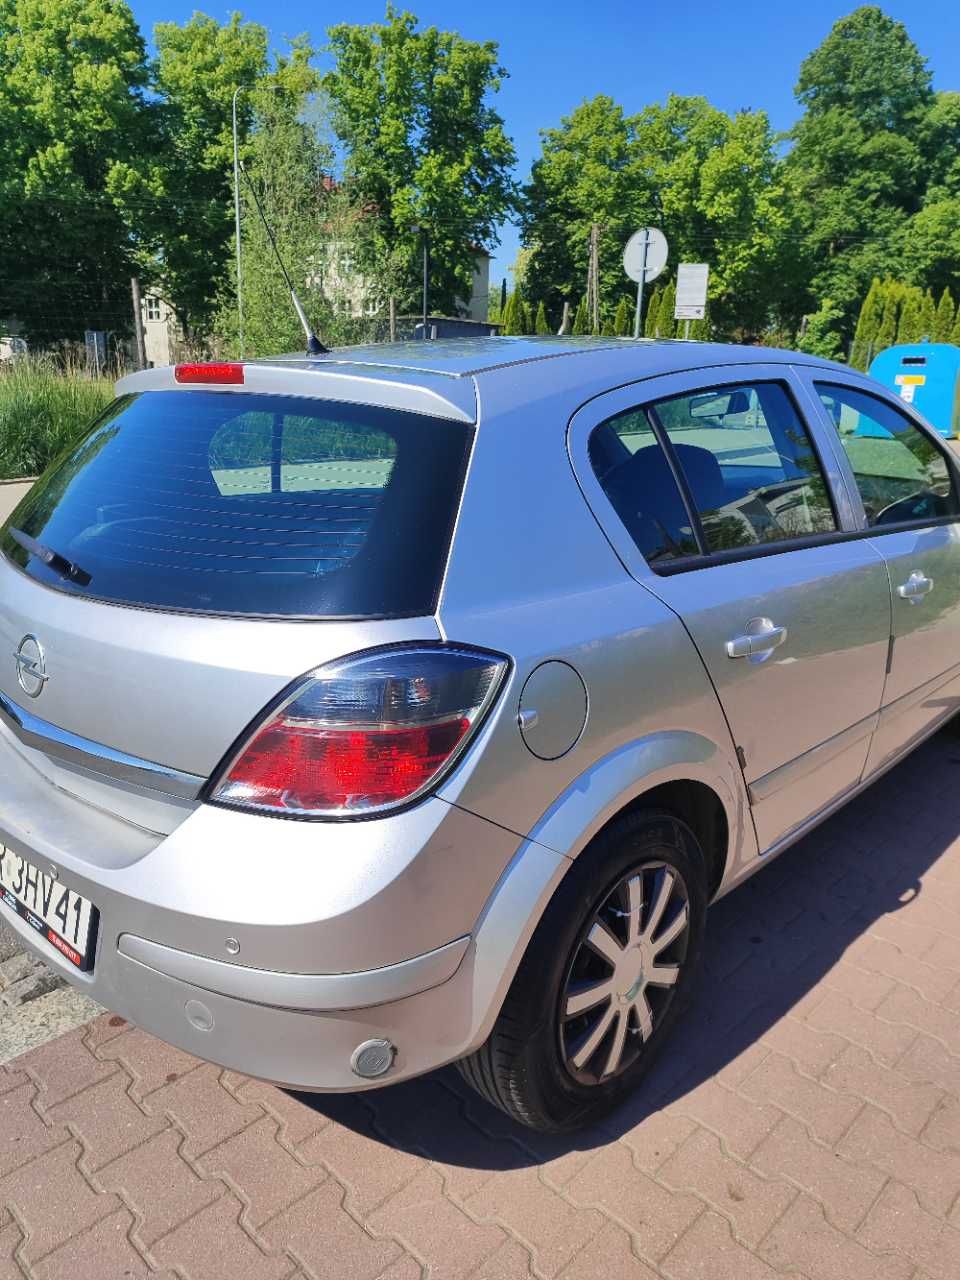 Opel Astra H 2009 benzyna + gaz.